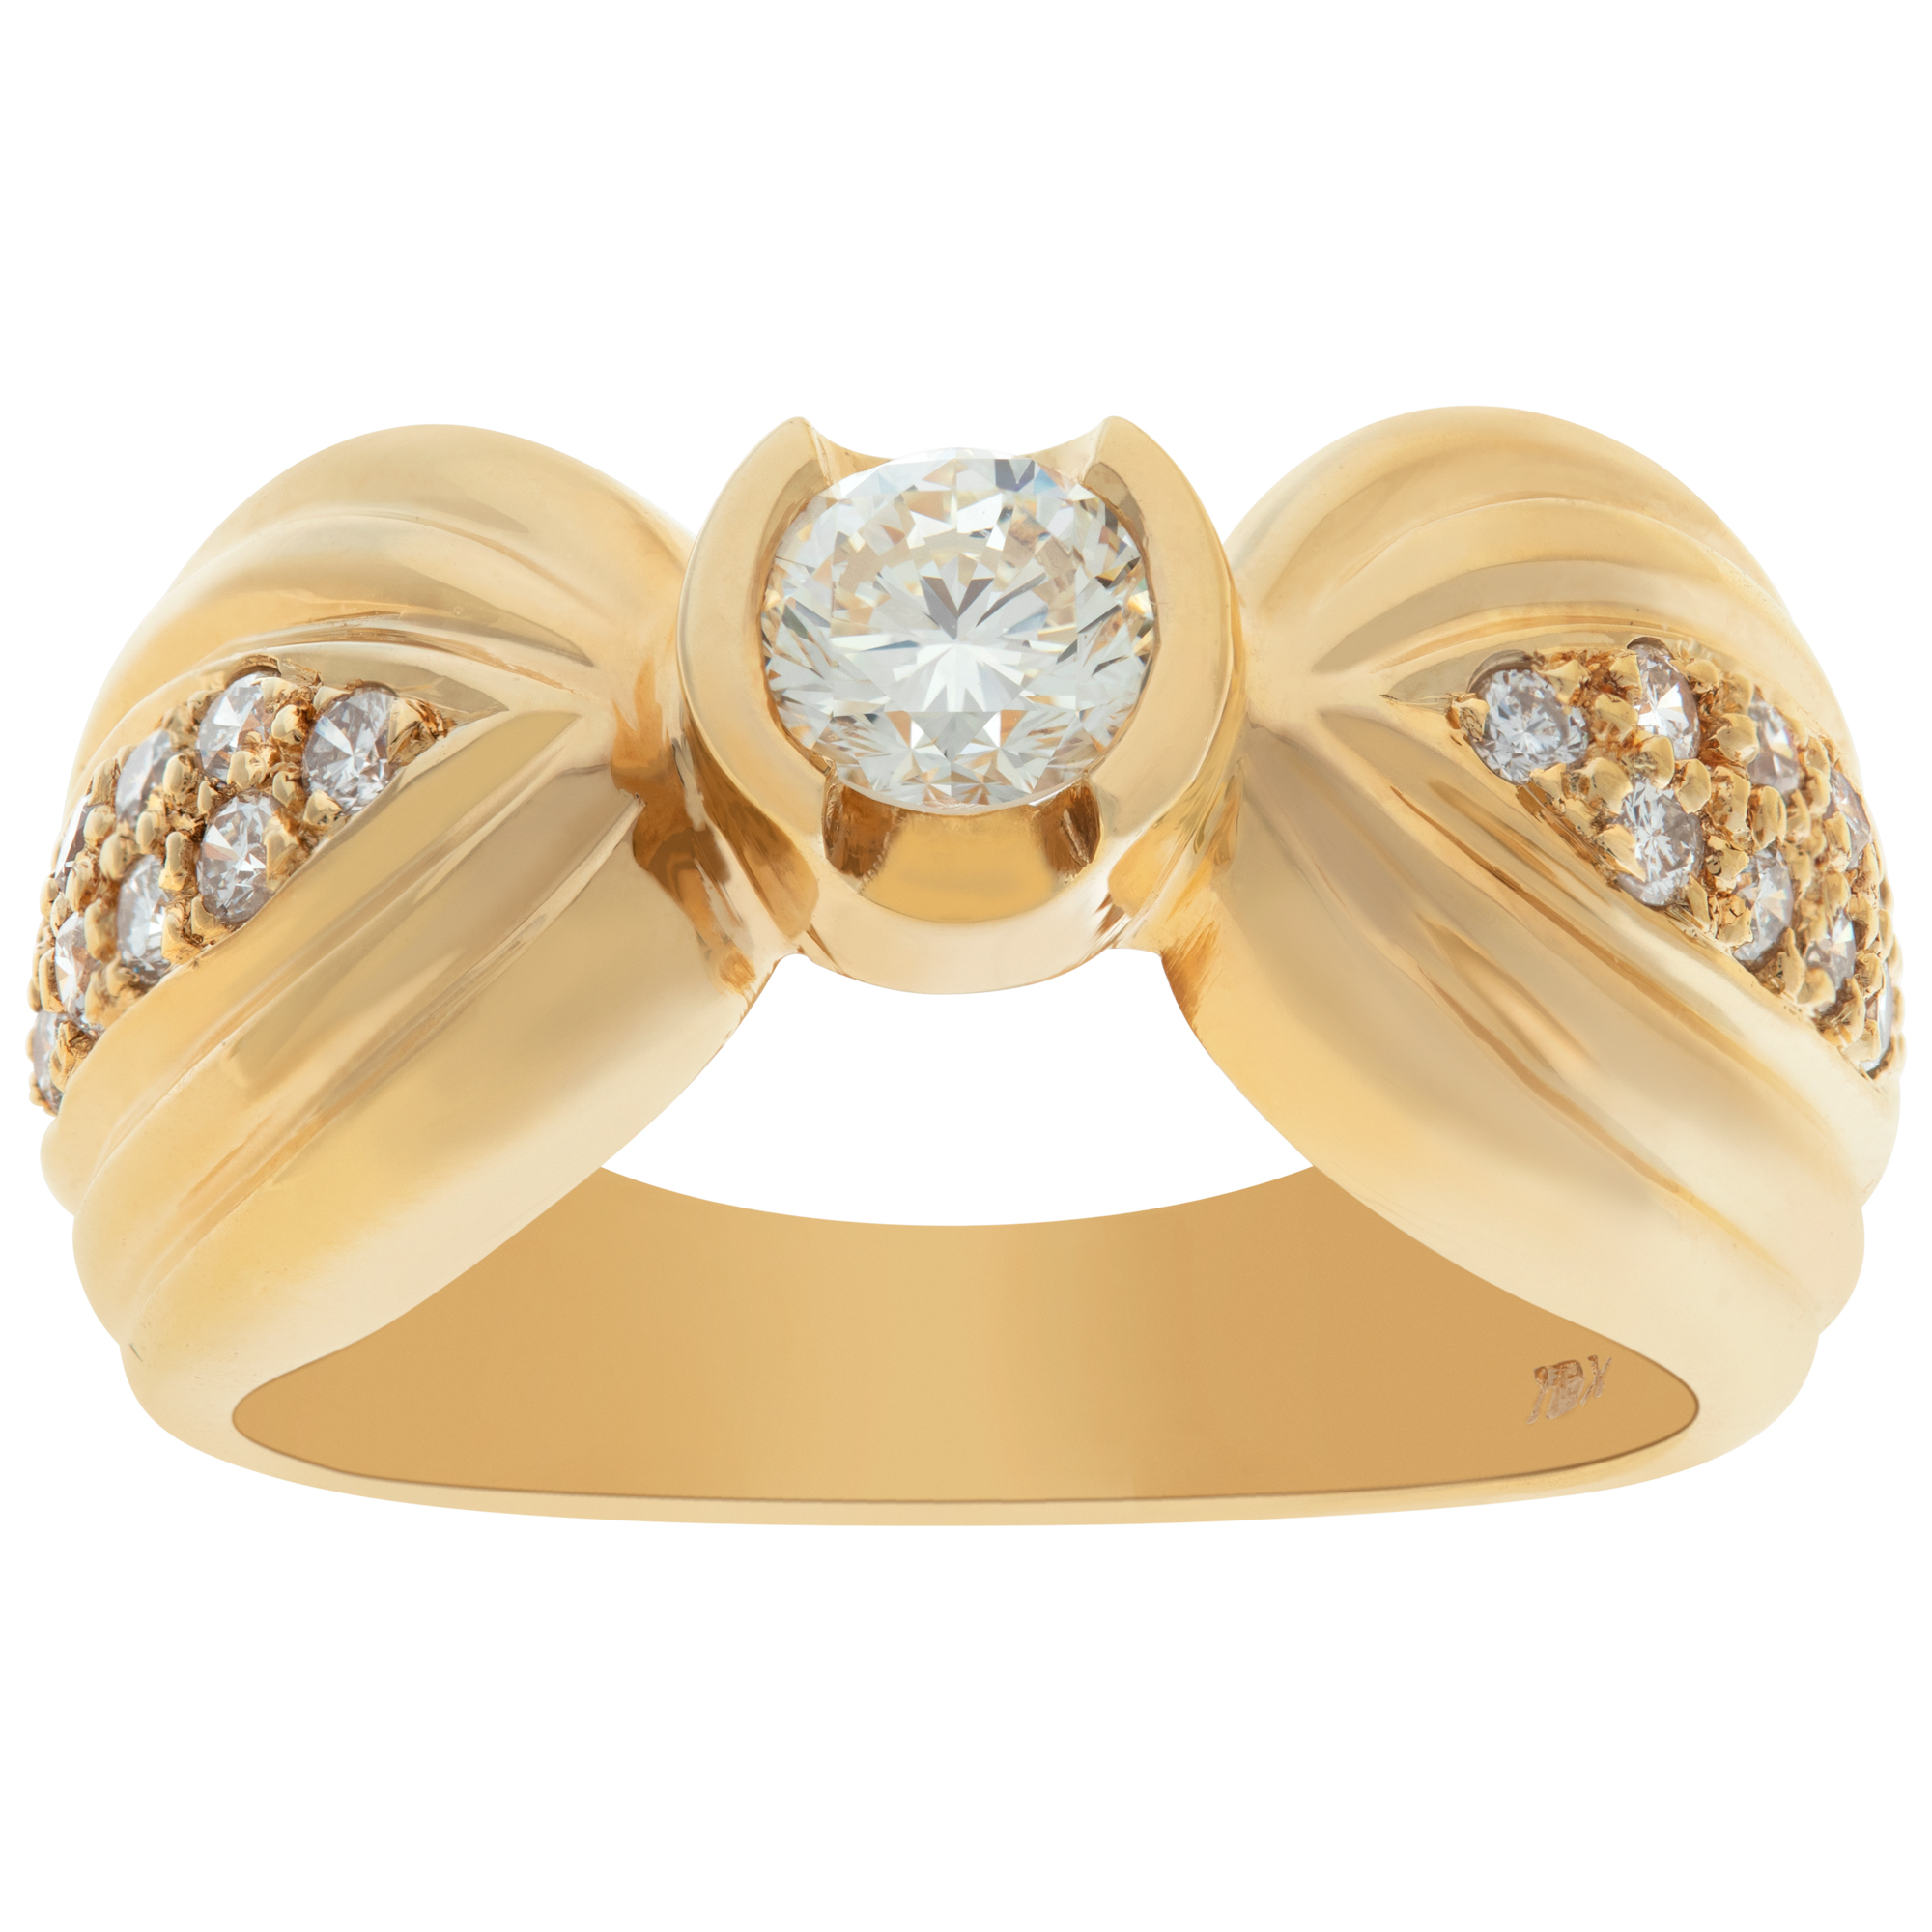 Diamond ring in 18k yellow gold with 0.4 carat center diamond